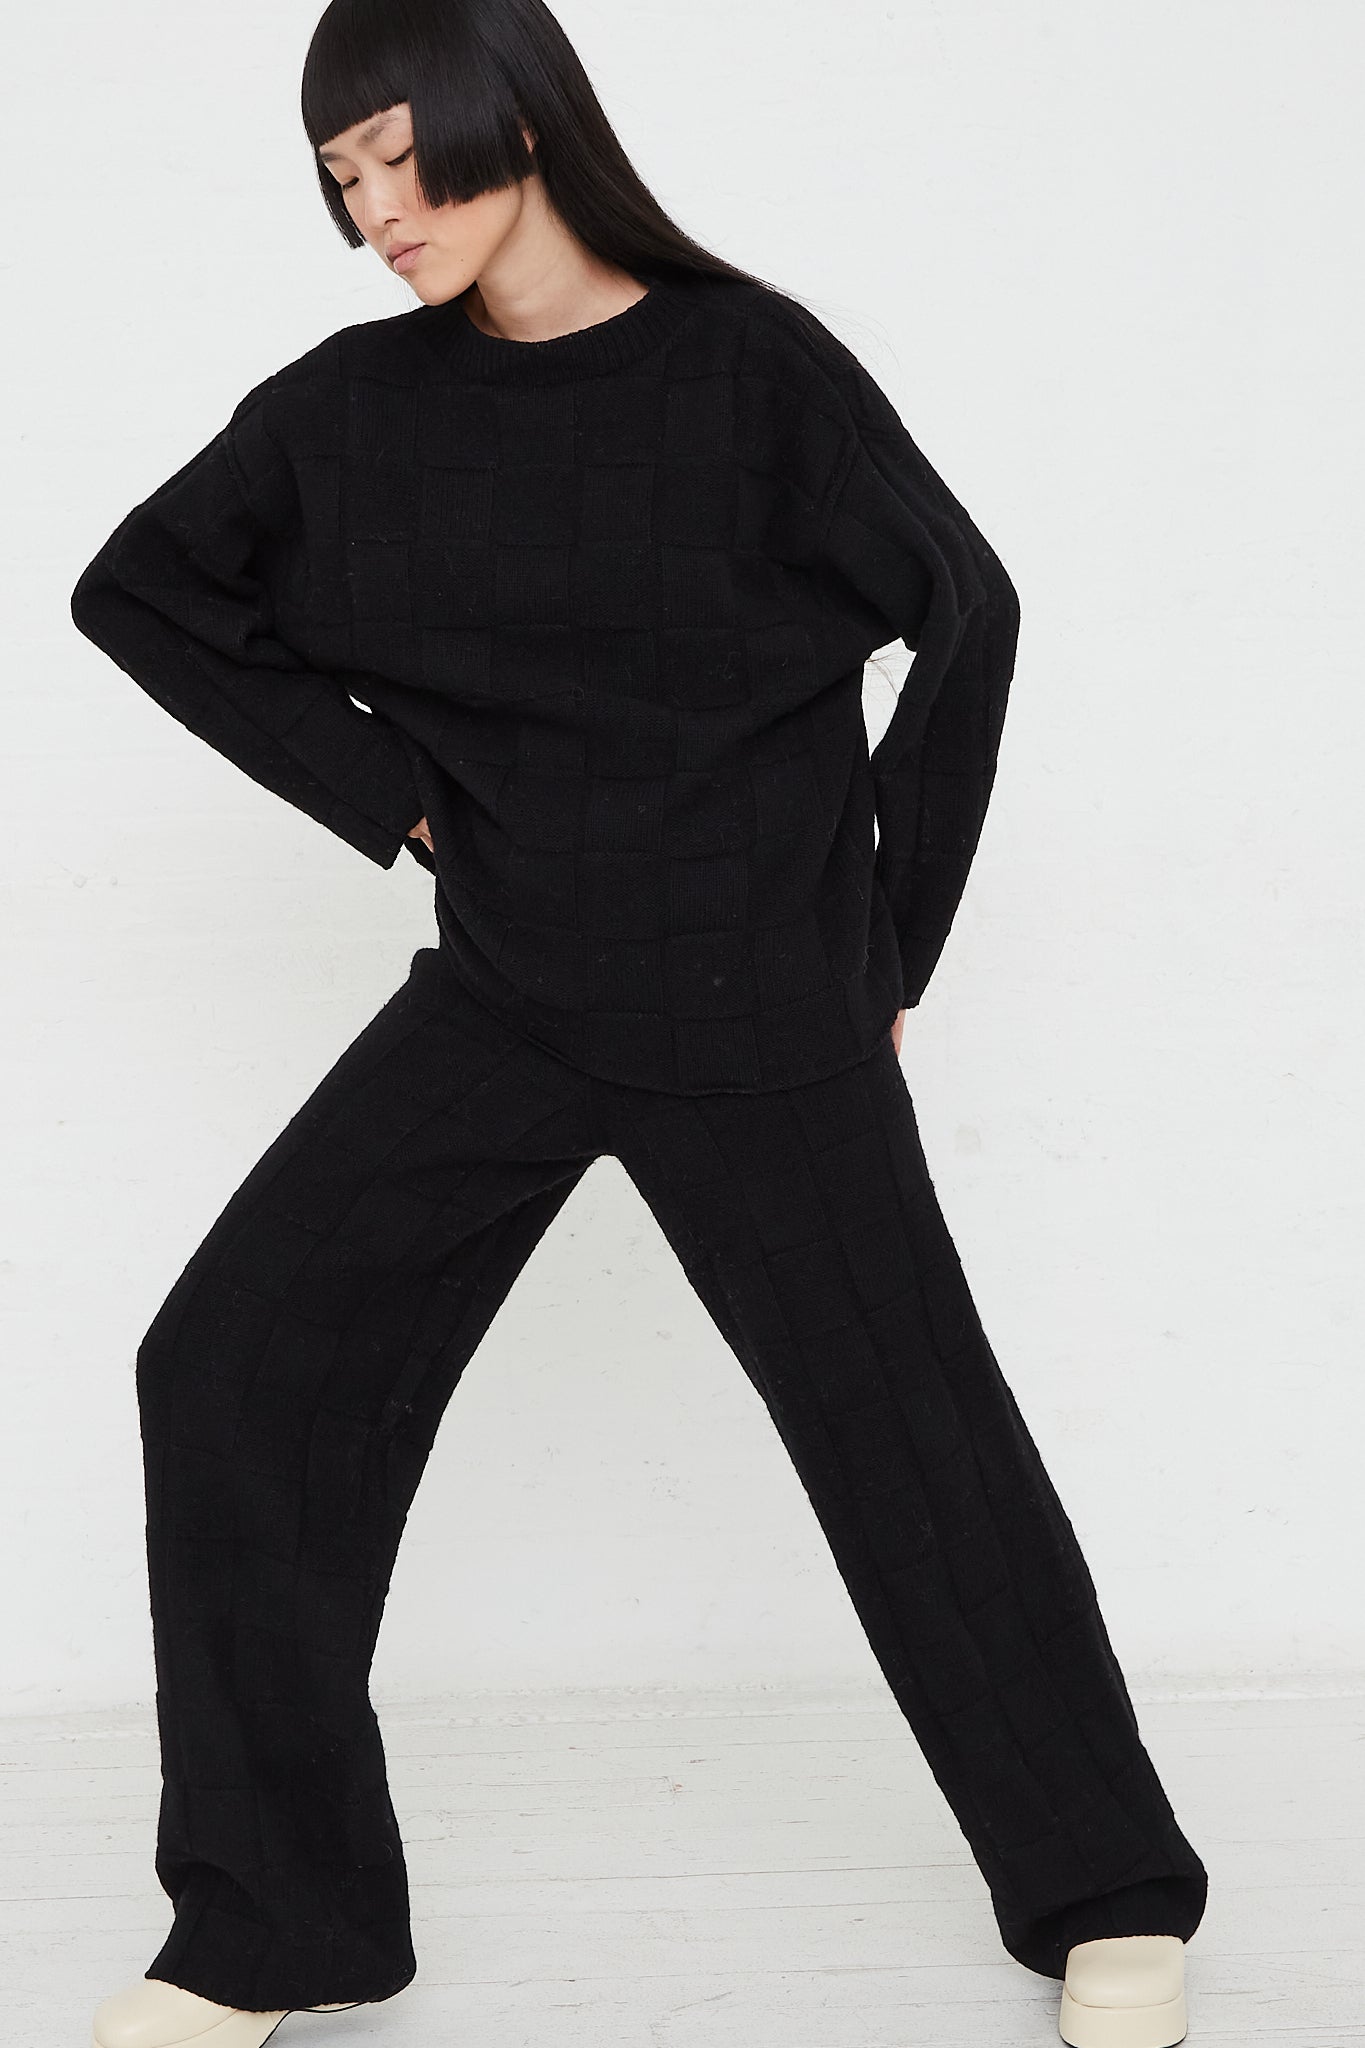 Konak Knit Pant in Black by Baserange for Oroboro Front